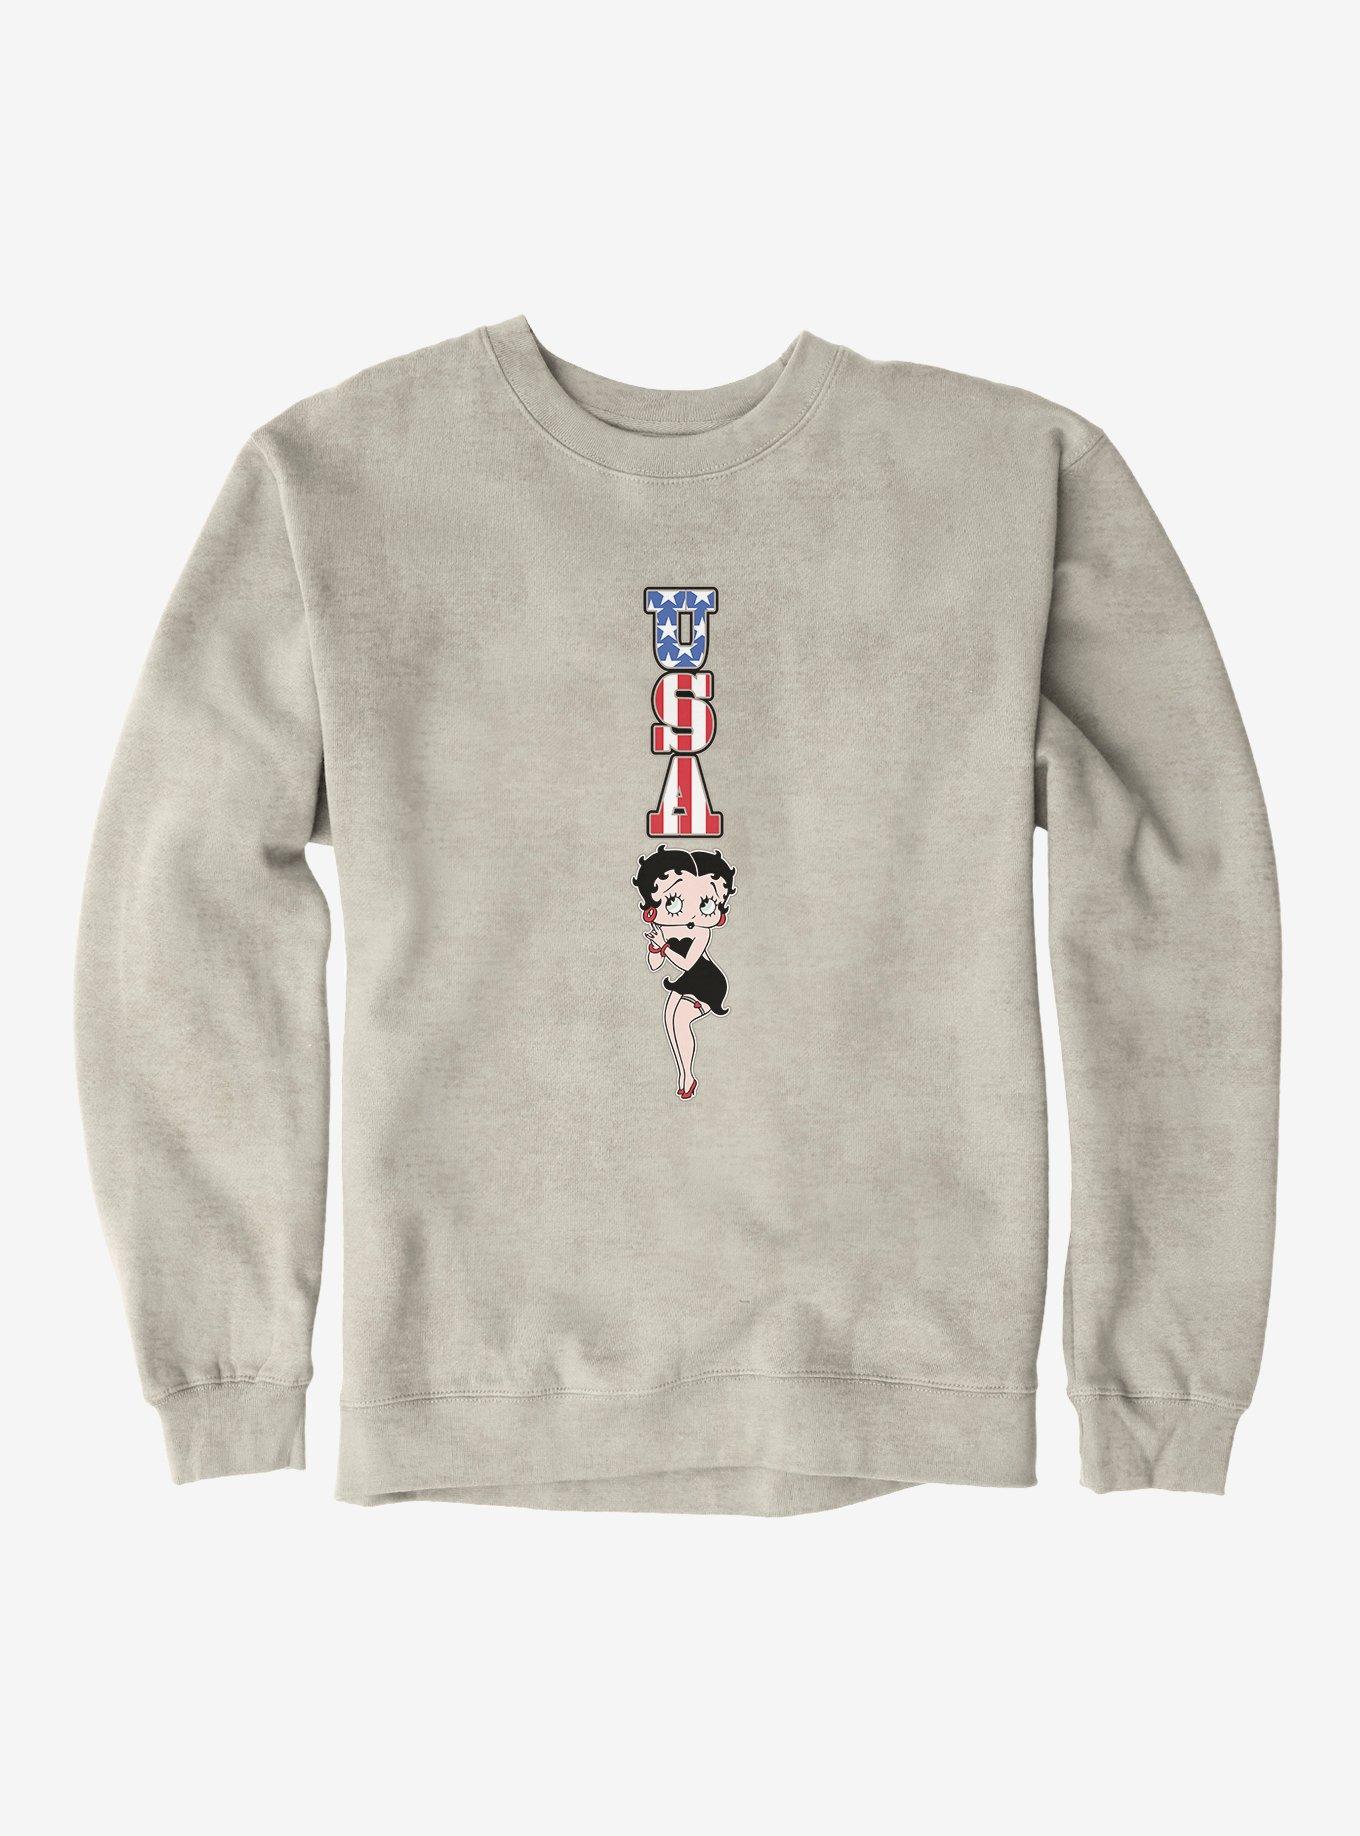 Betty Boop Americana USA Sweatshirt